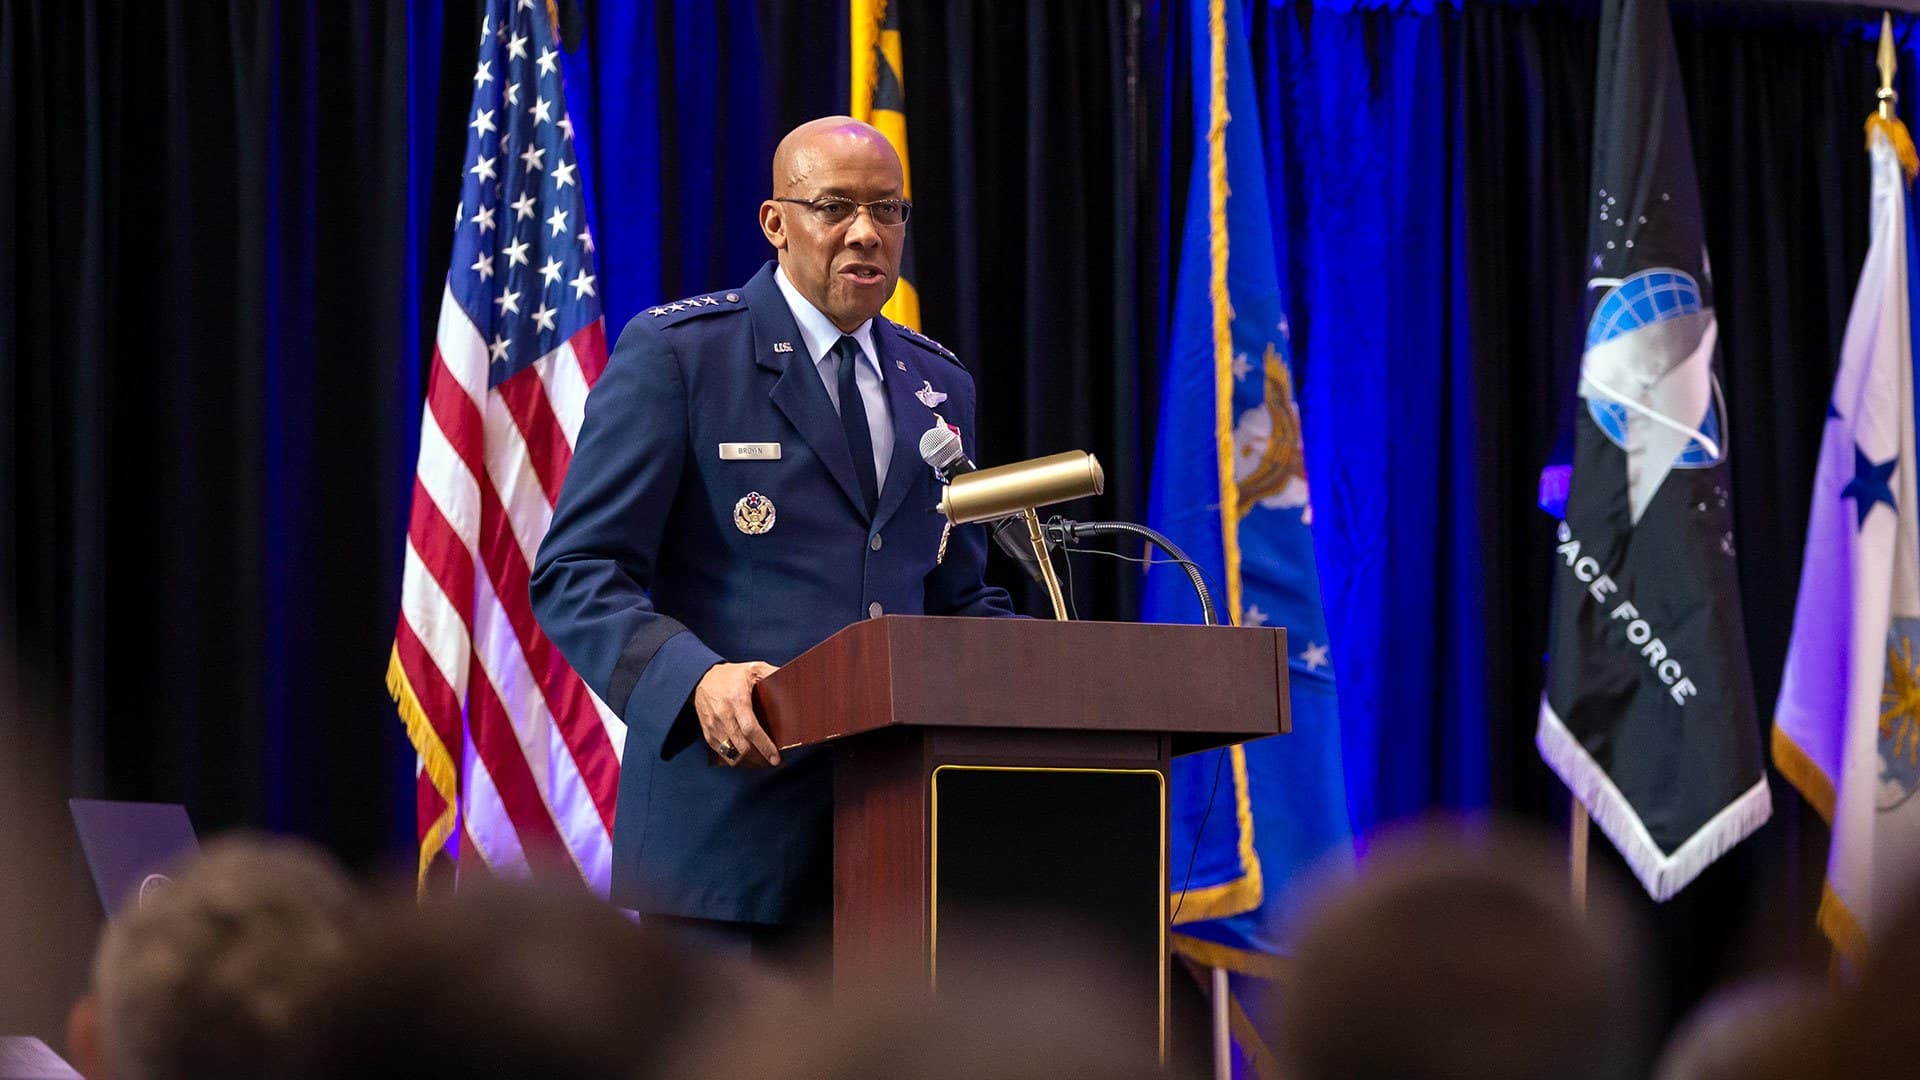 Air Force general gives remarks at podium